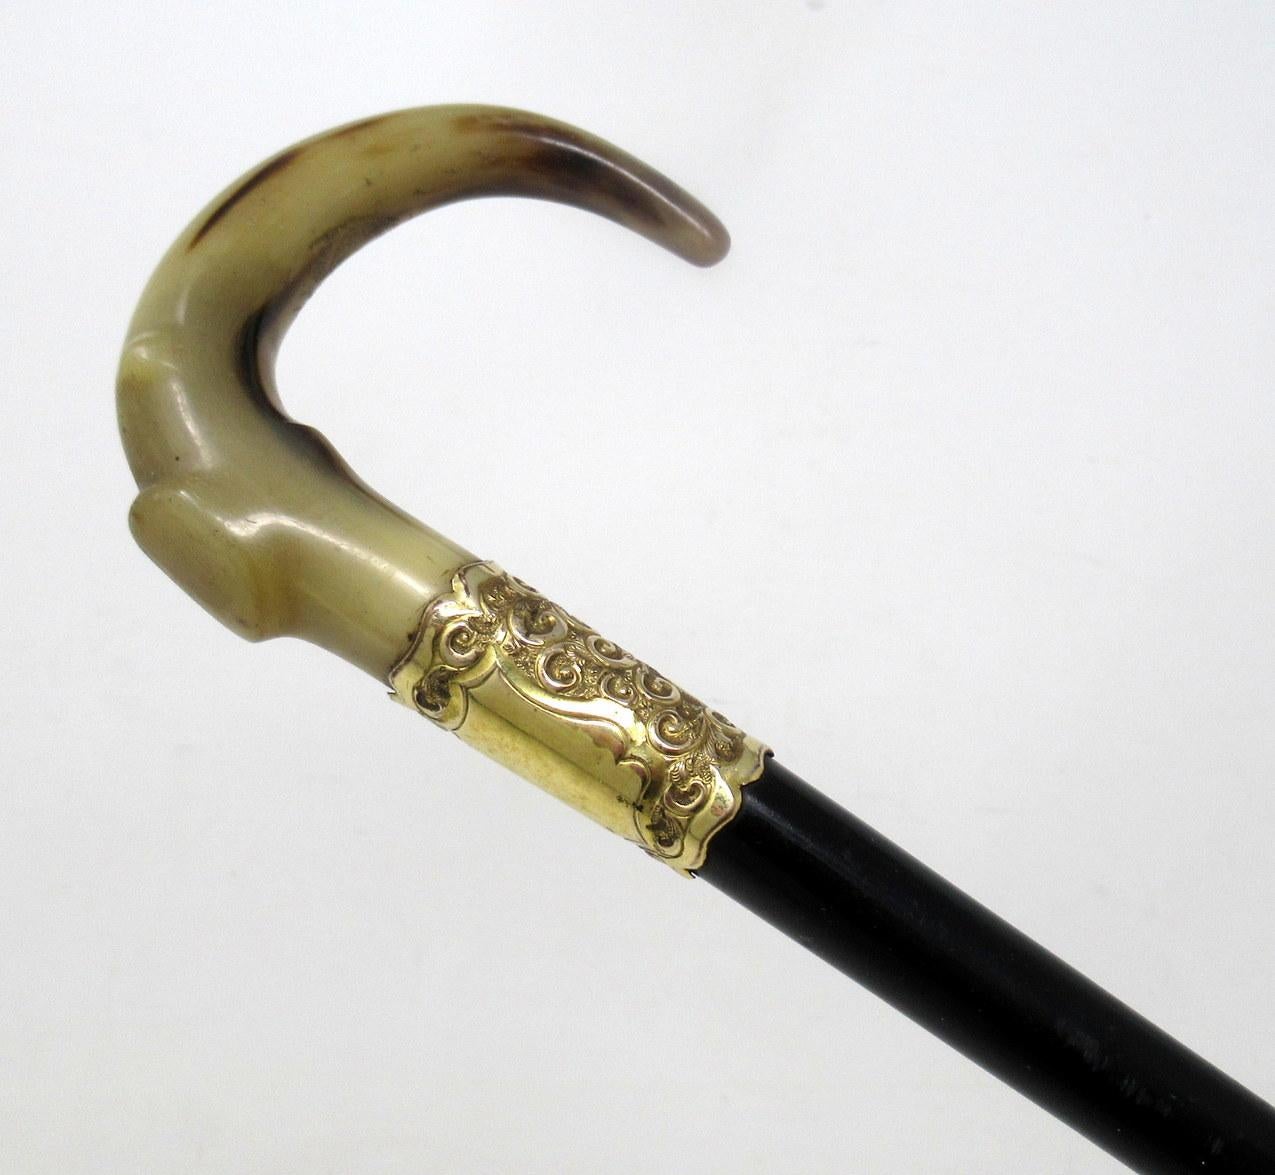 Carved Antique Vintage Ladies Gentleman's Walking Stick Gold Plated Cow Horn Handle